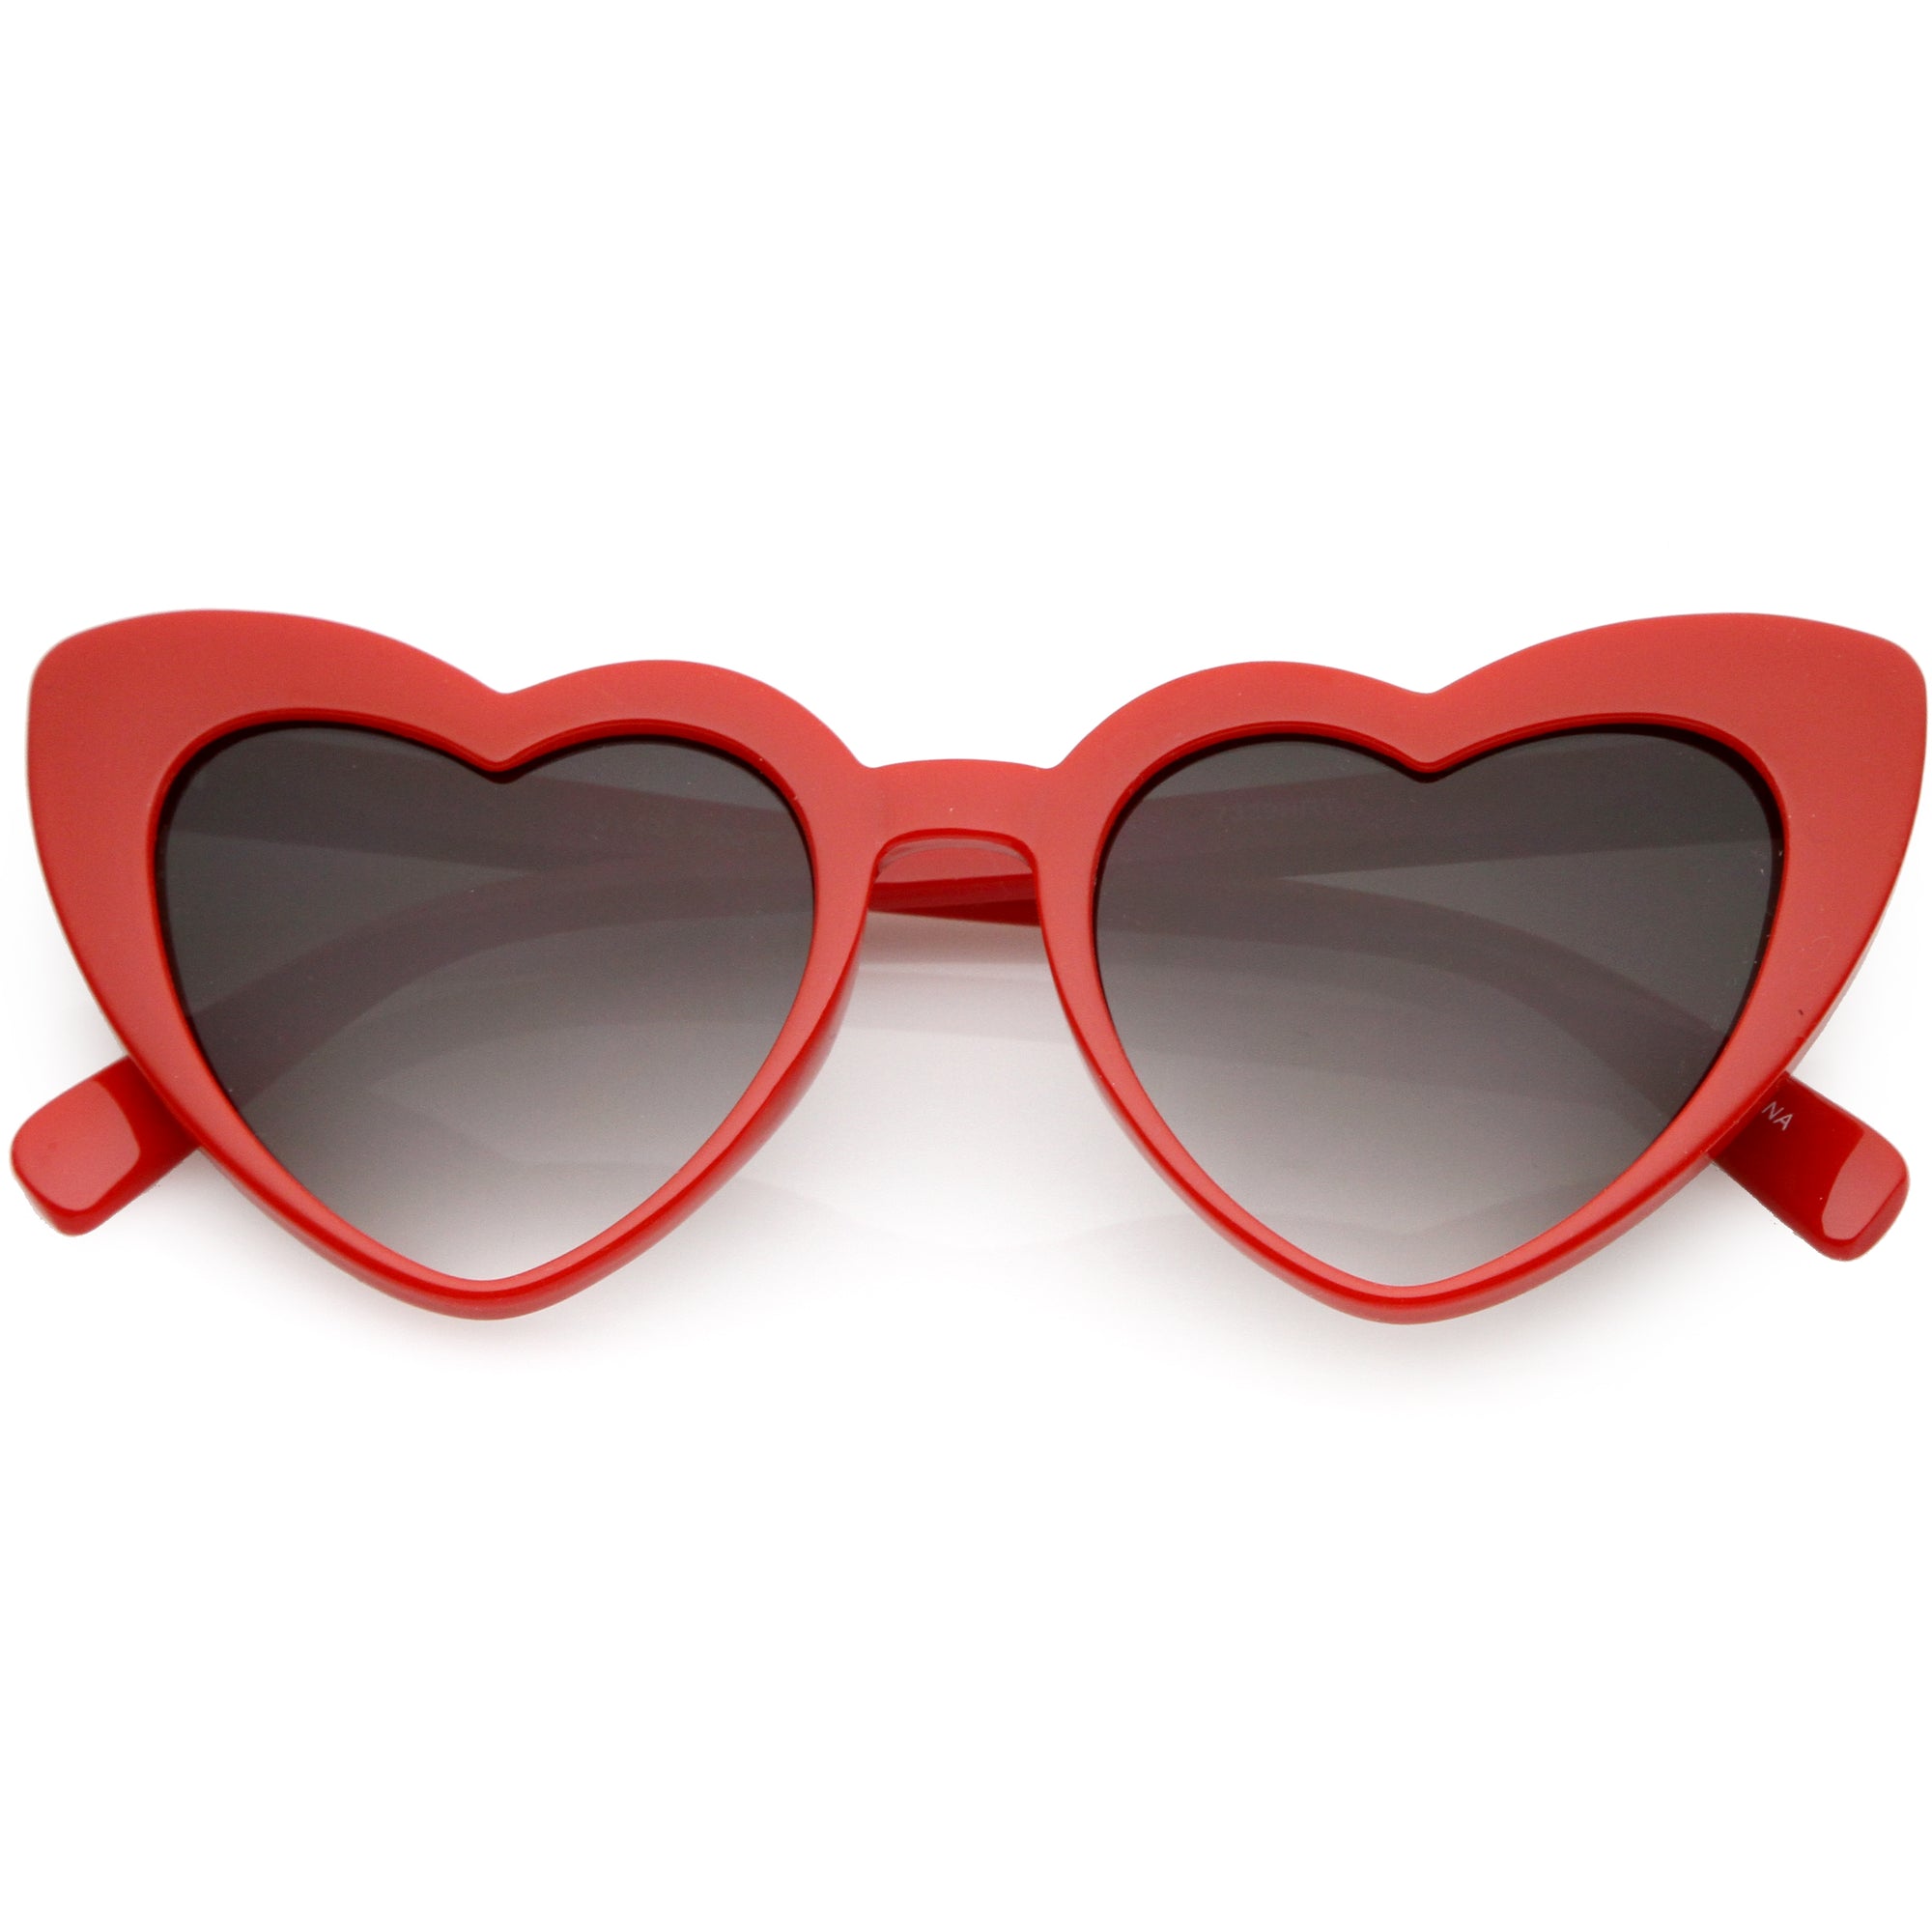 Women's Oversize Flat Lens Heart Shape Cat Eye Sunglasses C759 CREDIT: ZEROUV